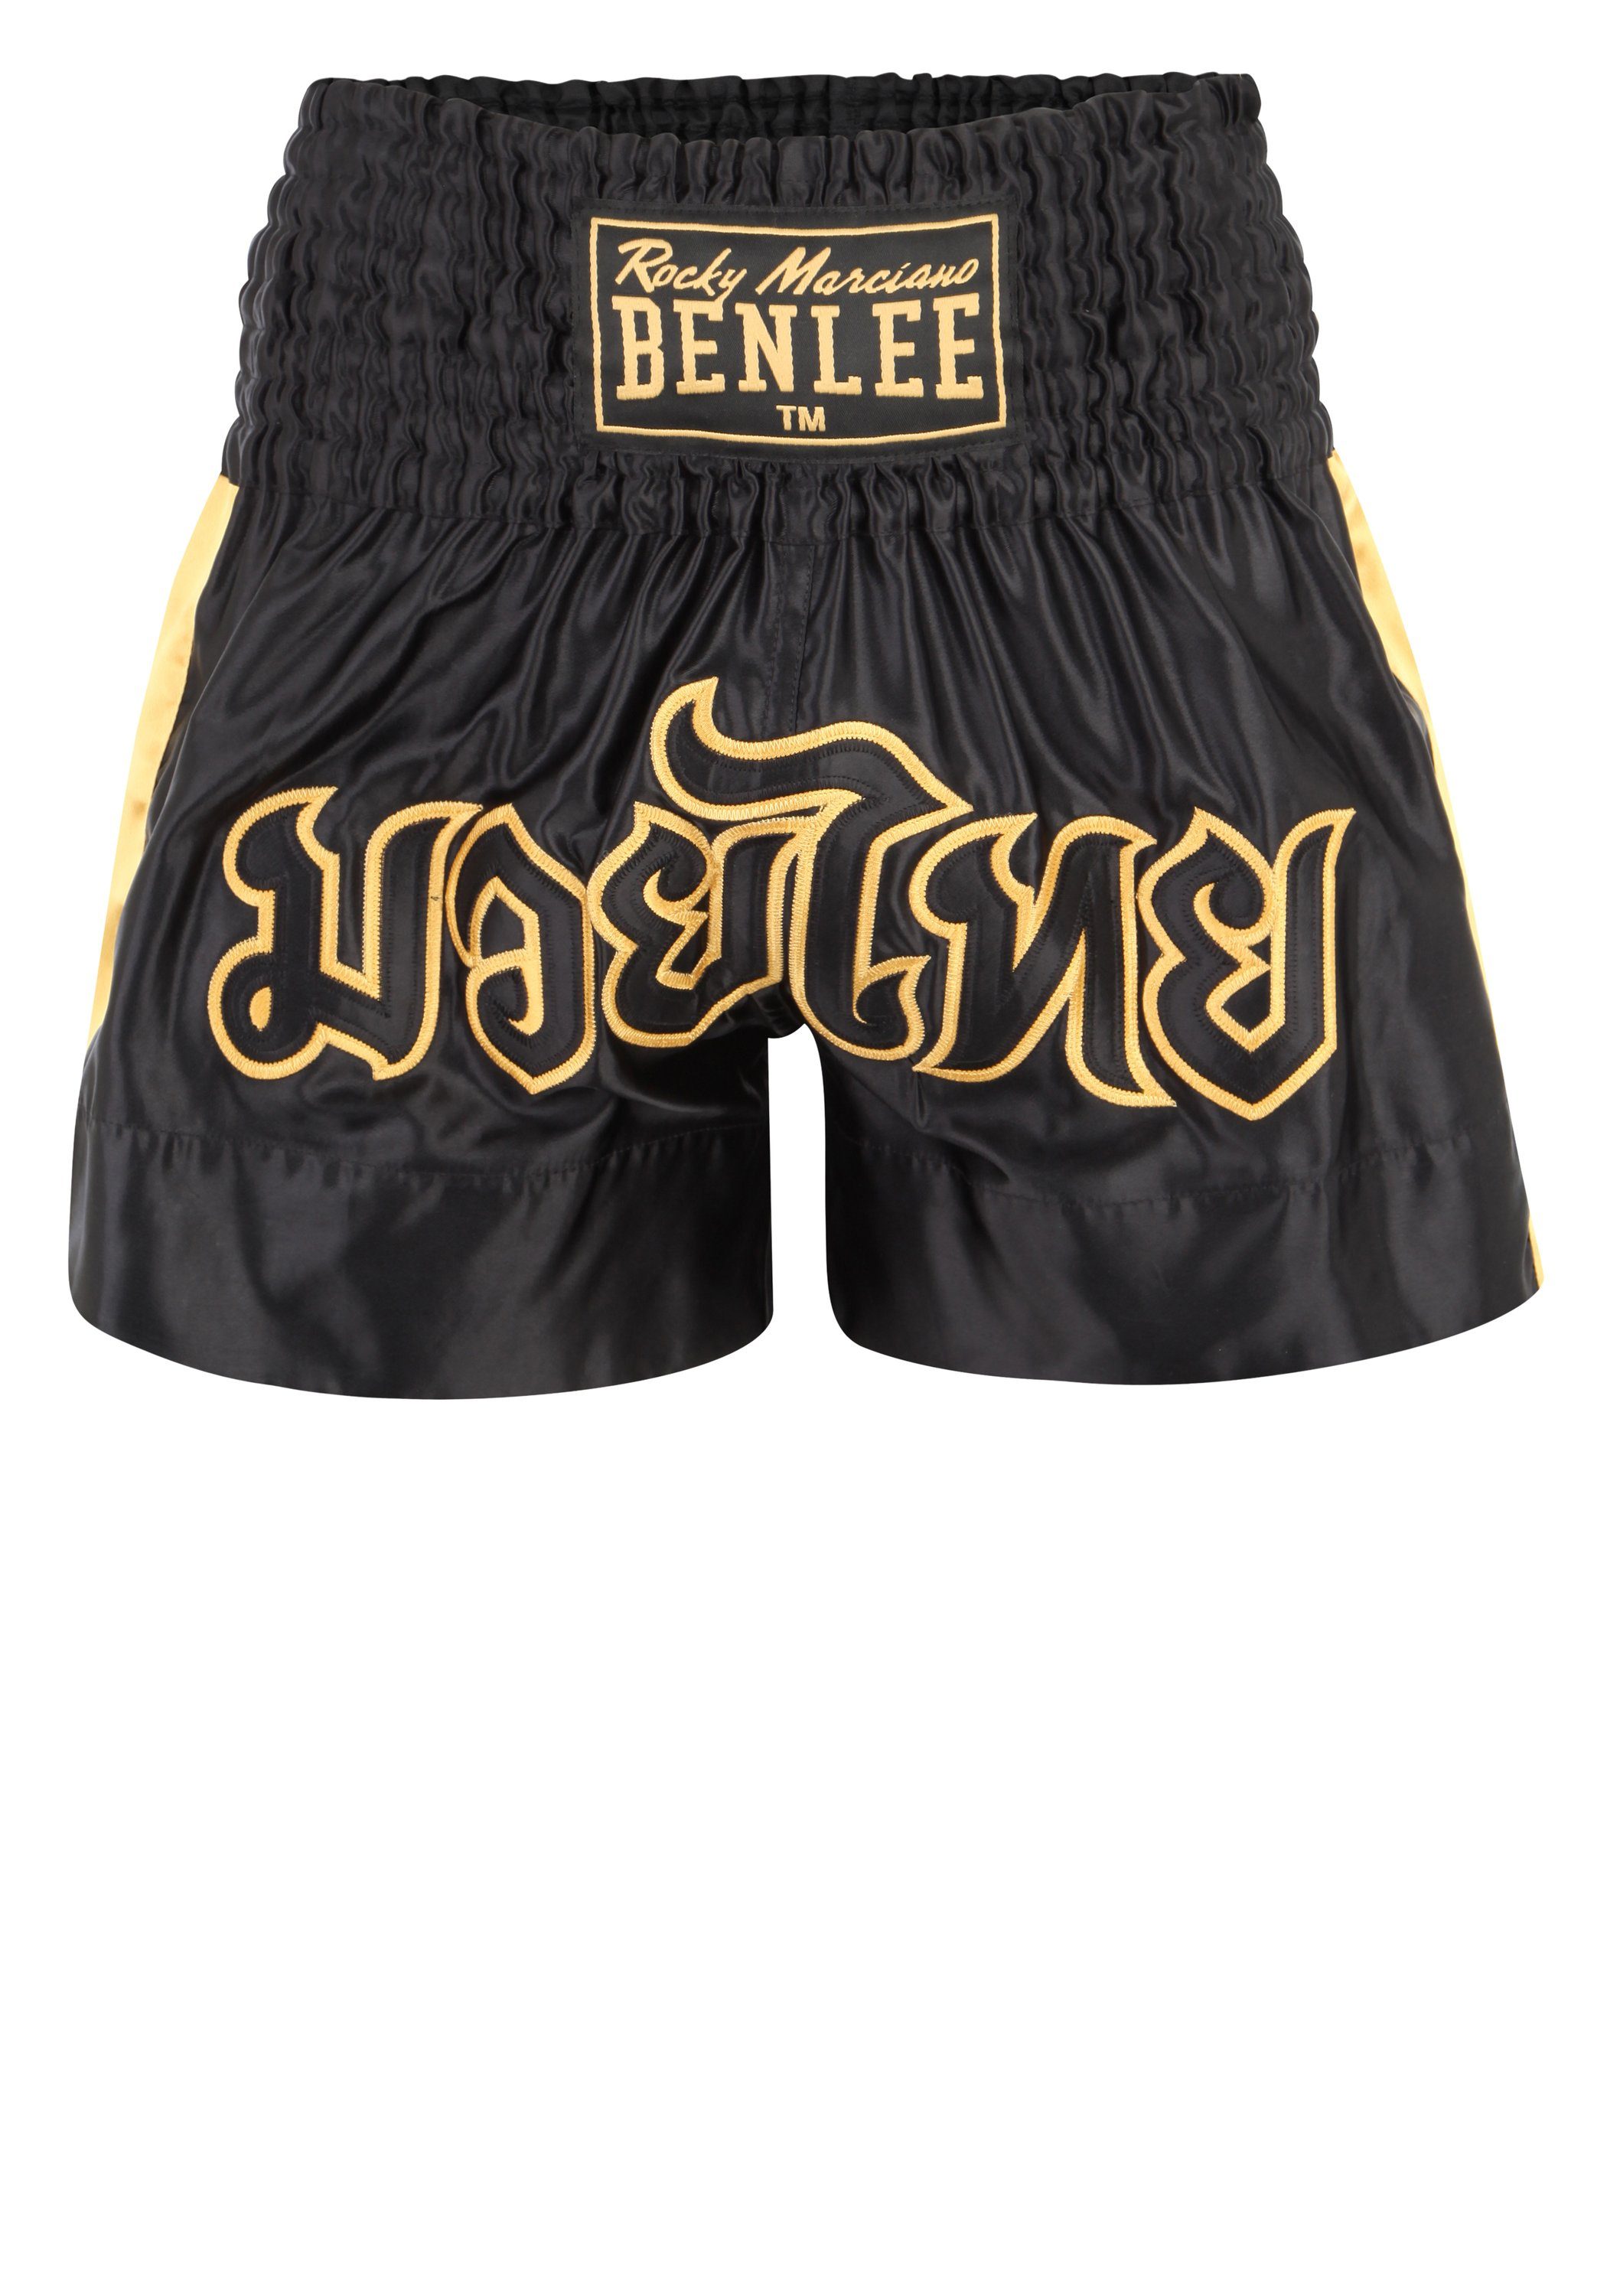 Benlee Rocky Marciano Trainingshose GOLDY Black/Gold